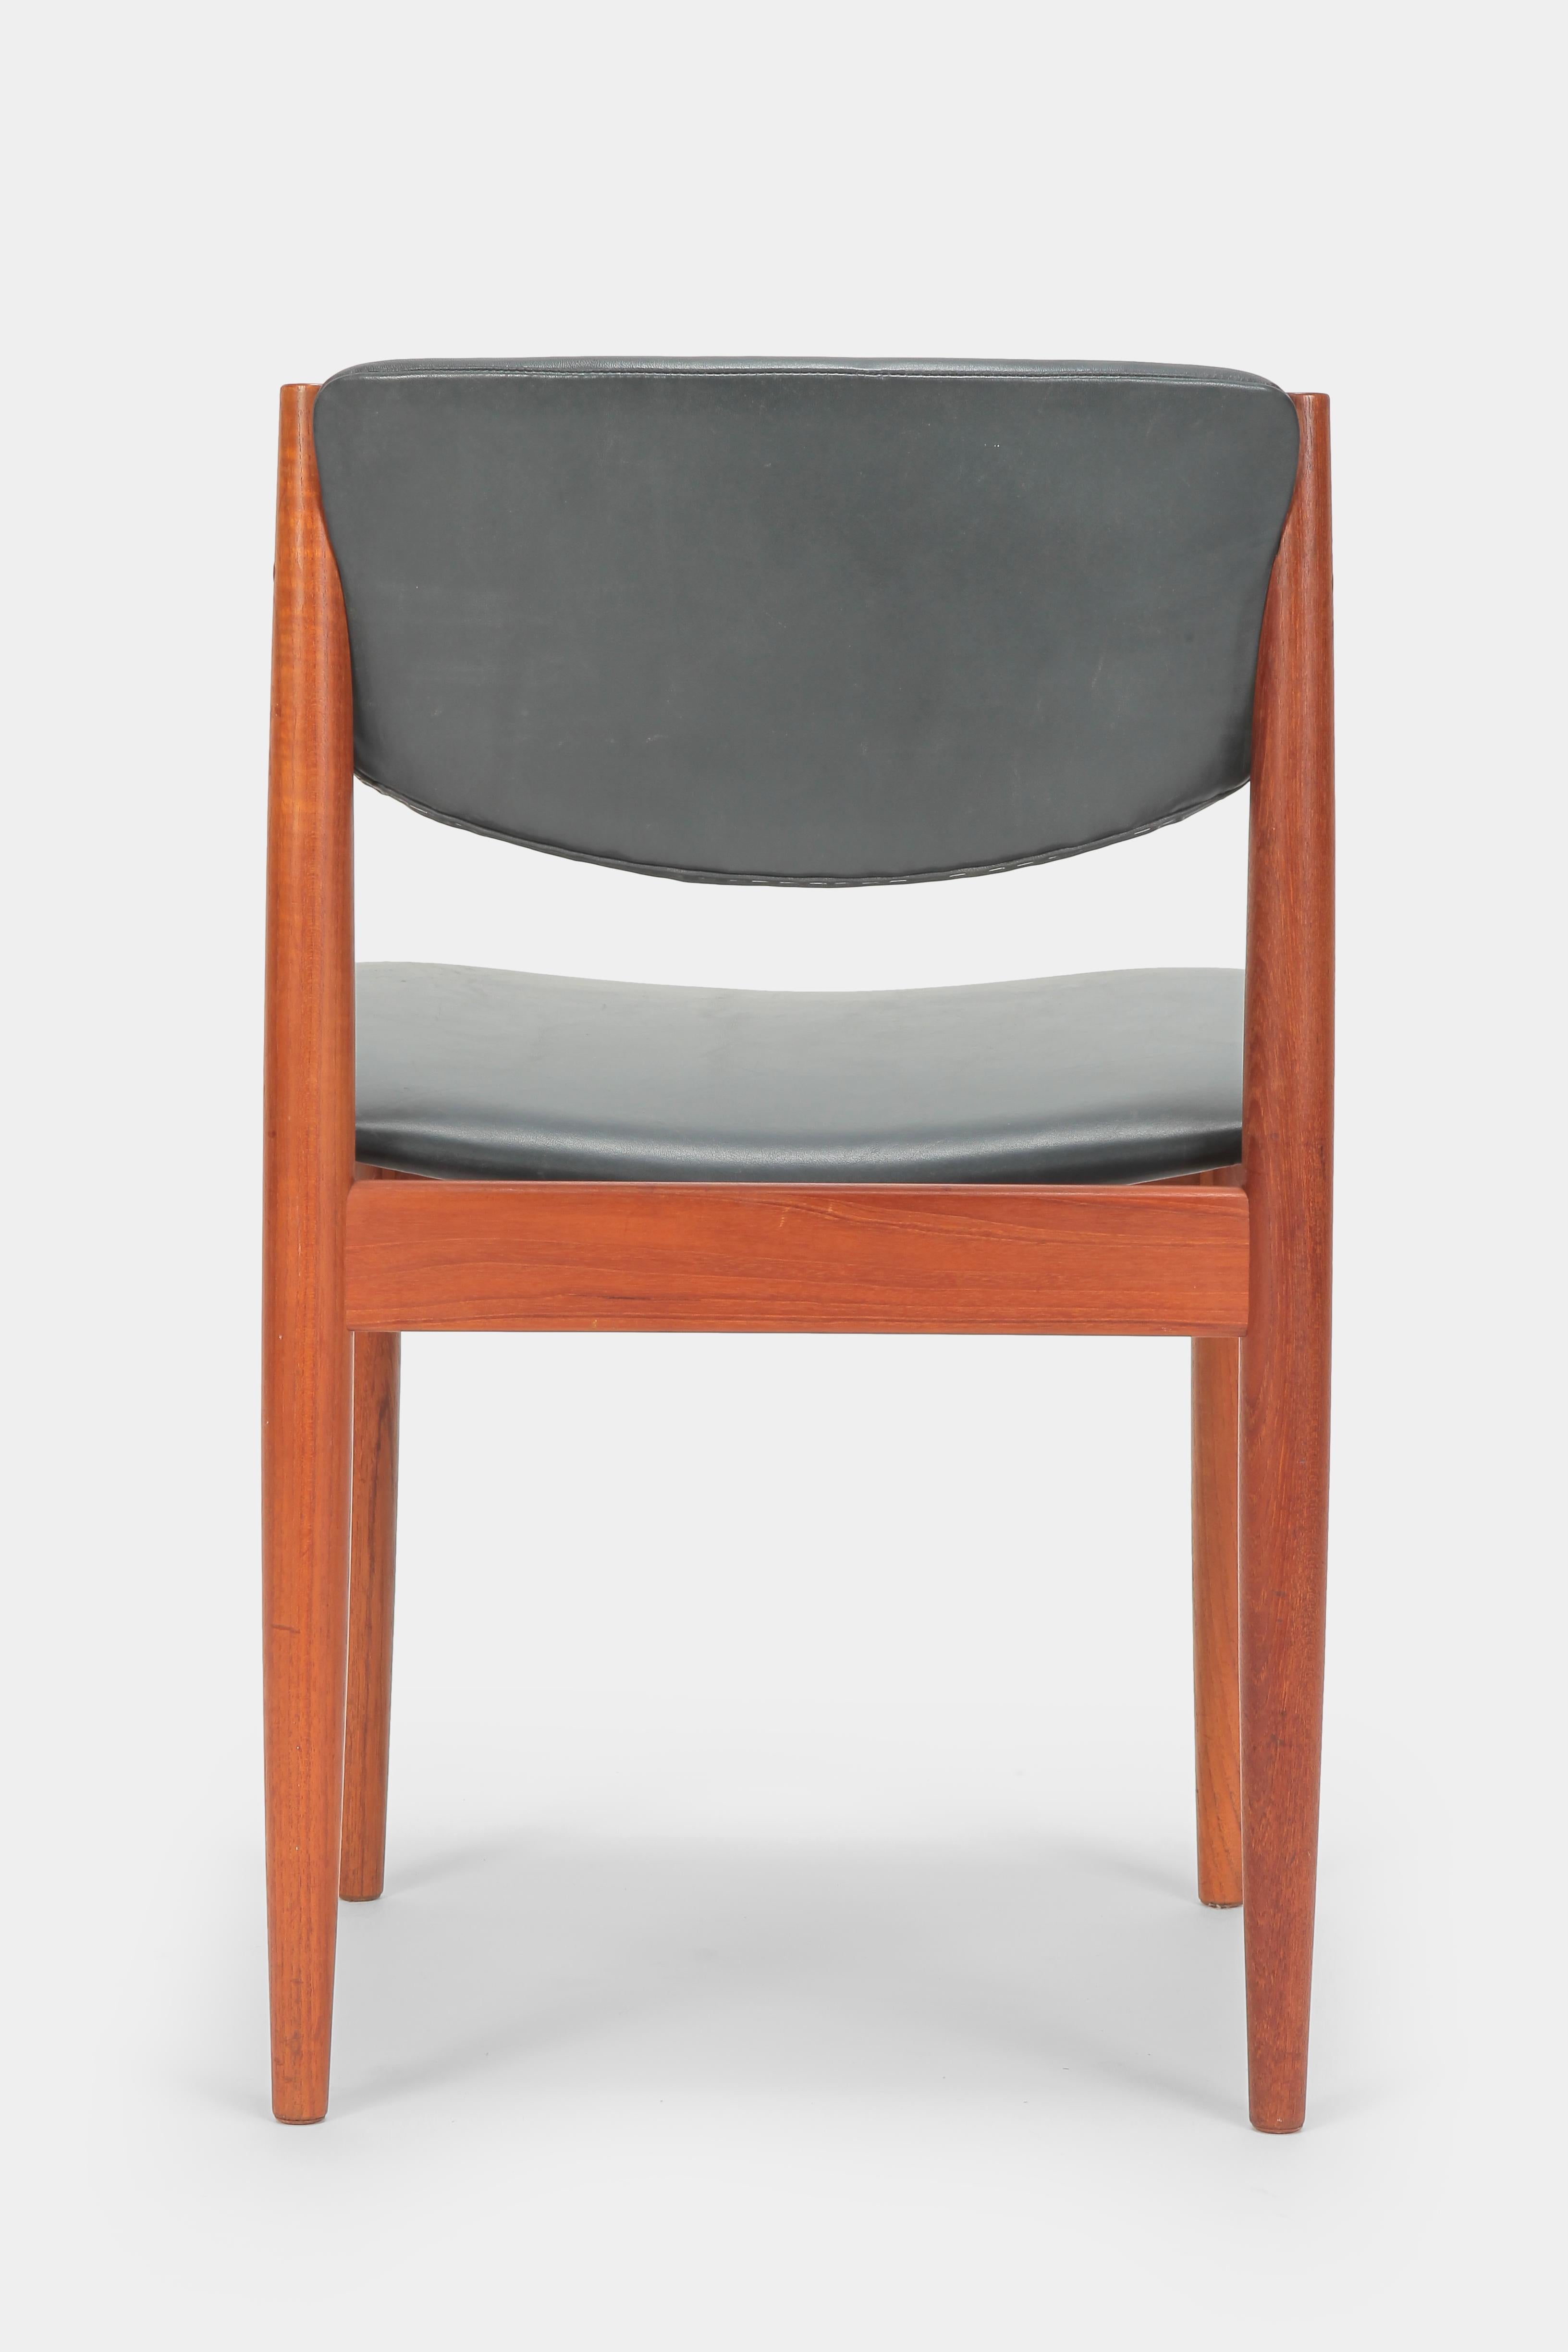 Pair Finn Juhl Model 197 Chairs Leather Teak, 1960s For Sale 4